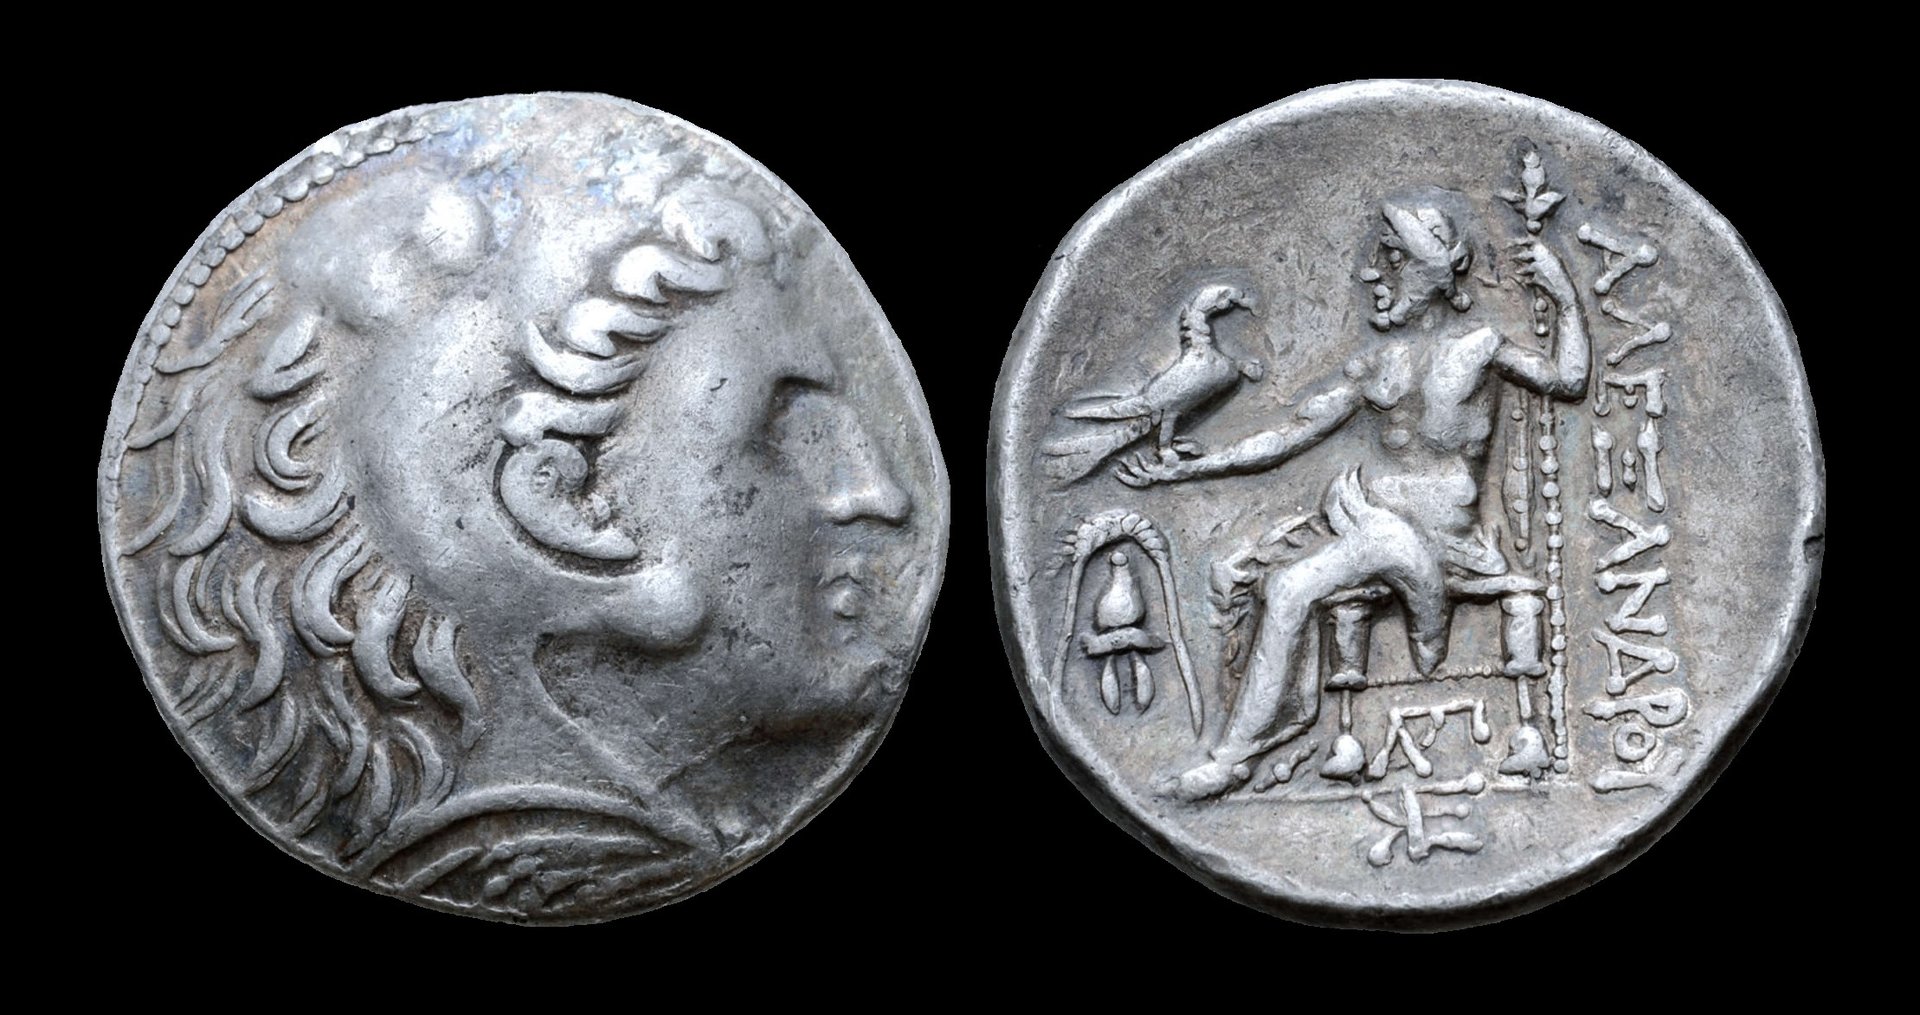 Antigonos Gonatas. Amphipolis 275-271 BC. 17.0 gr, 28mm. Crested helmet. Price 629A.jpg